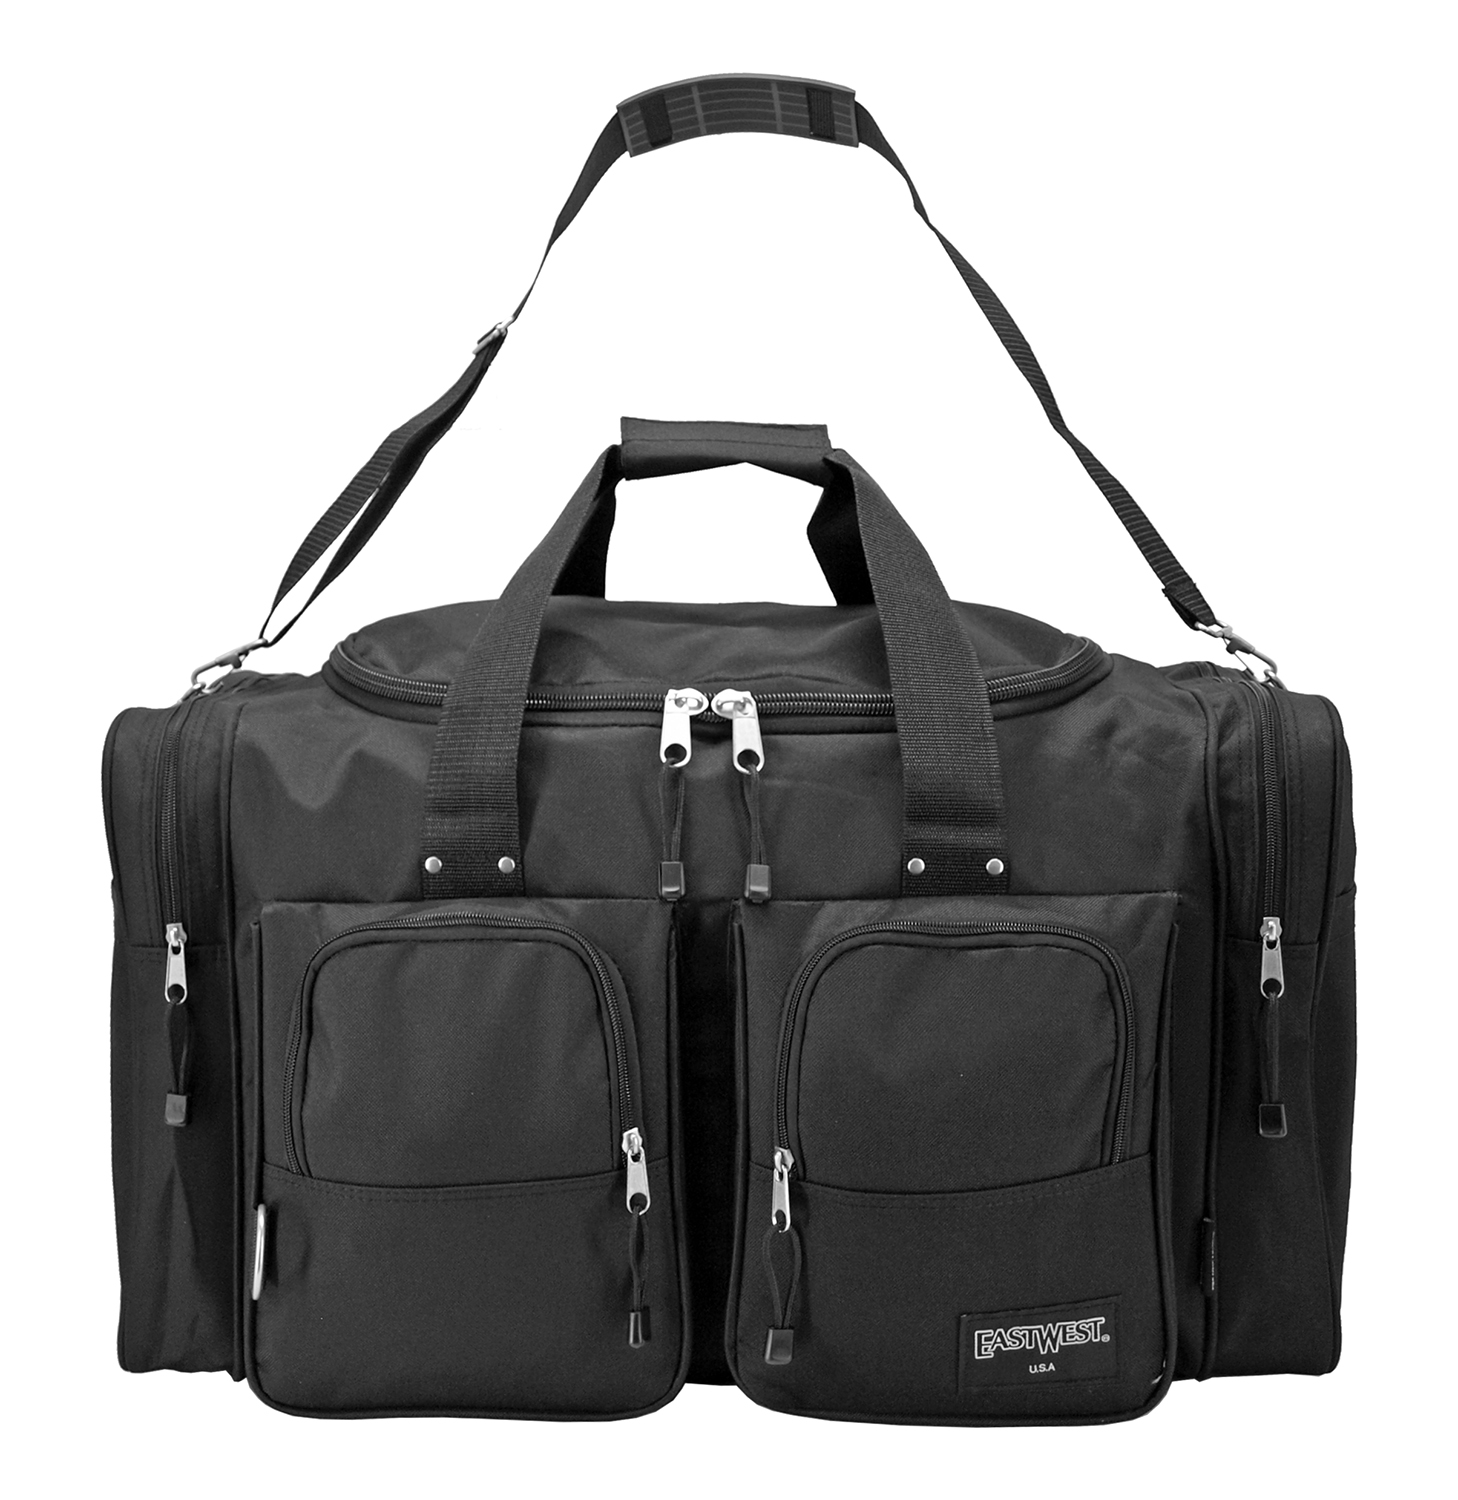 The Large Standard Duffle Bag - Black